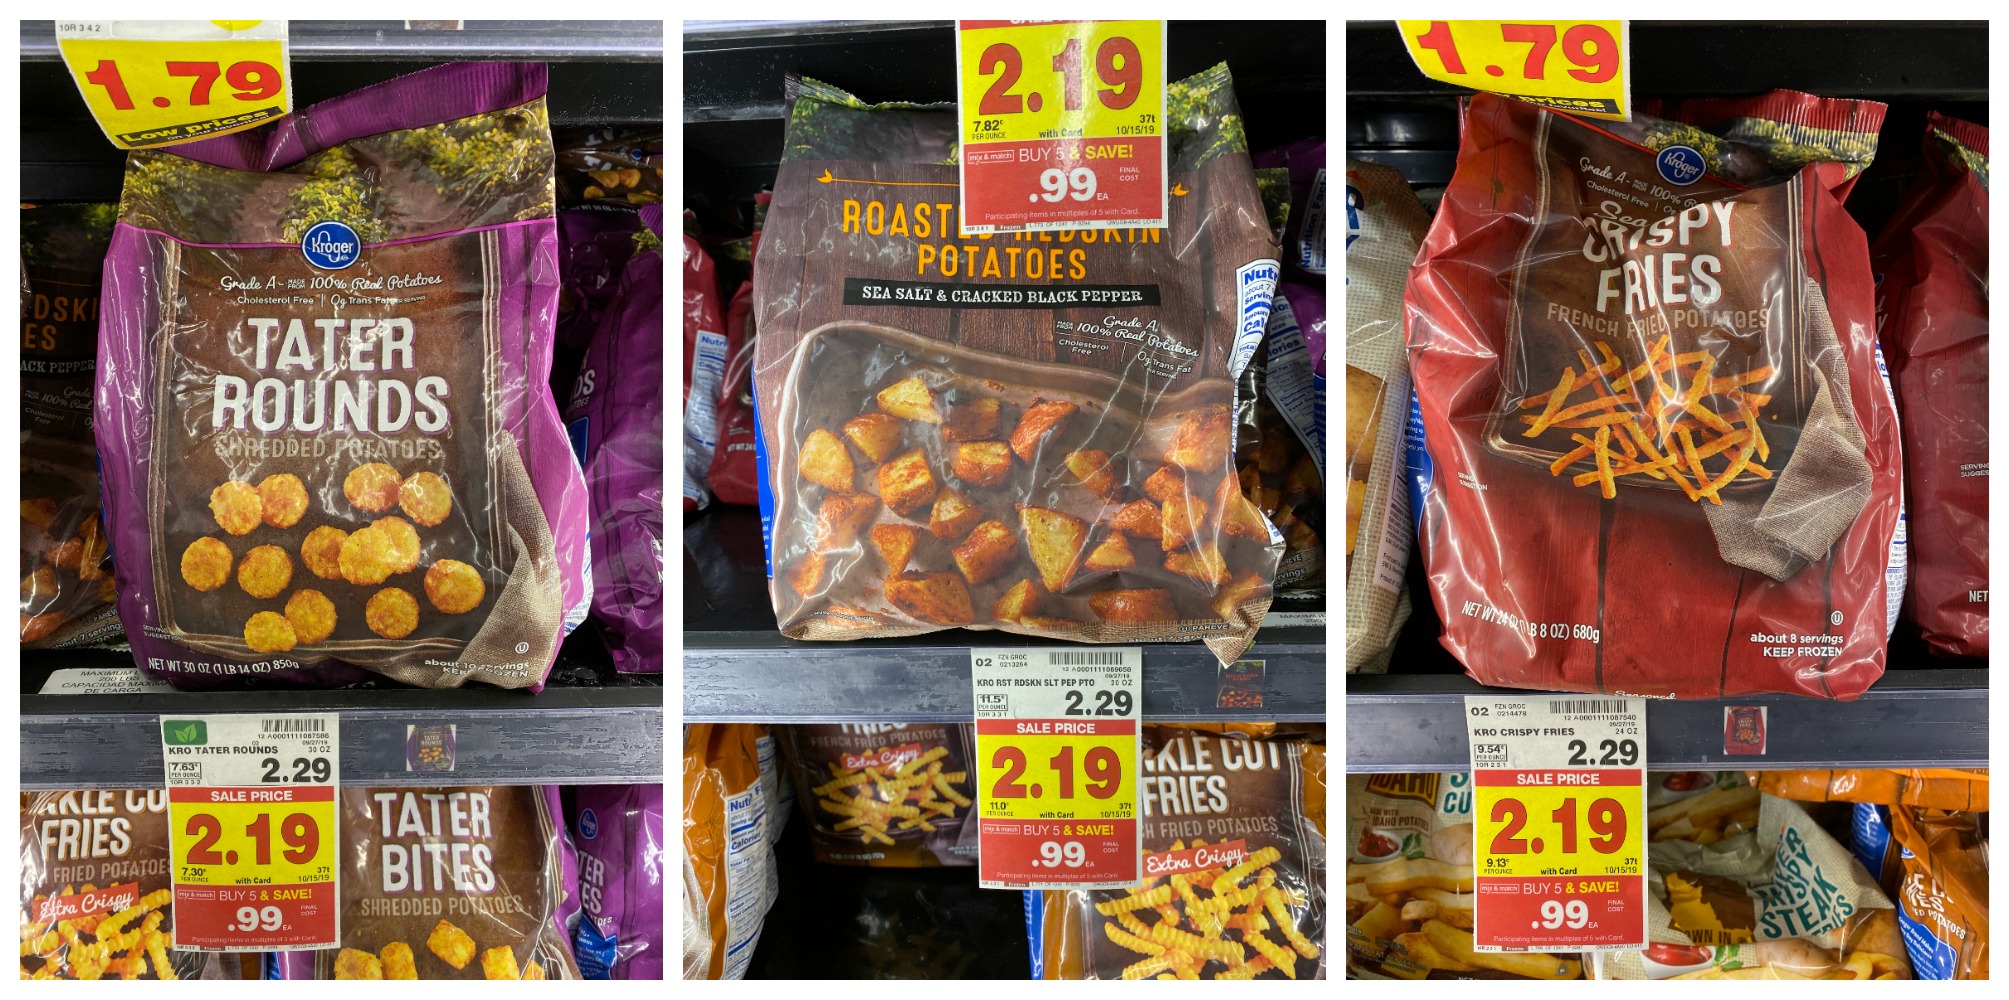 Kroger brand Frozen Potatoes are JUST $0.99!! (Reg Price $2.29 ...